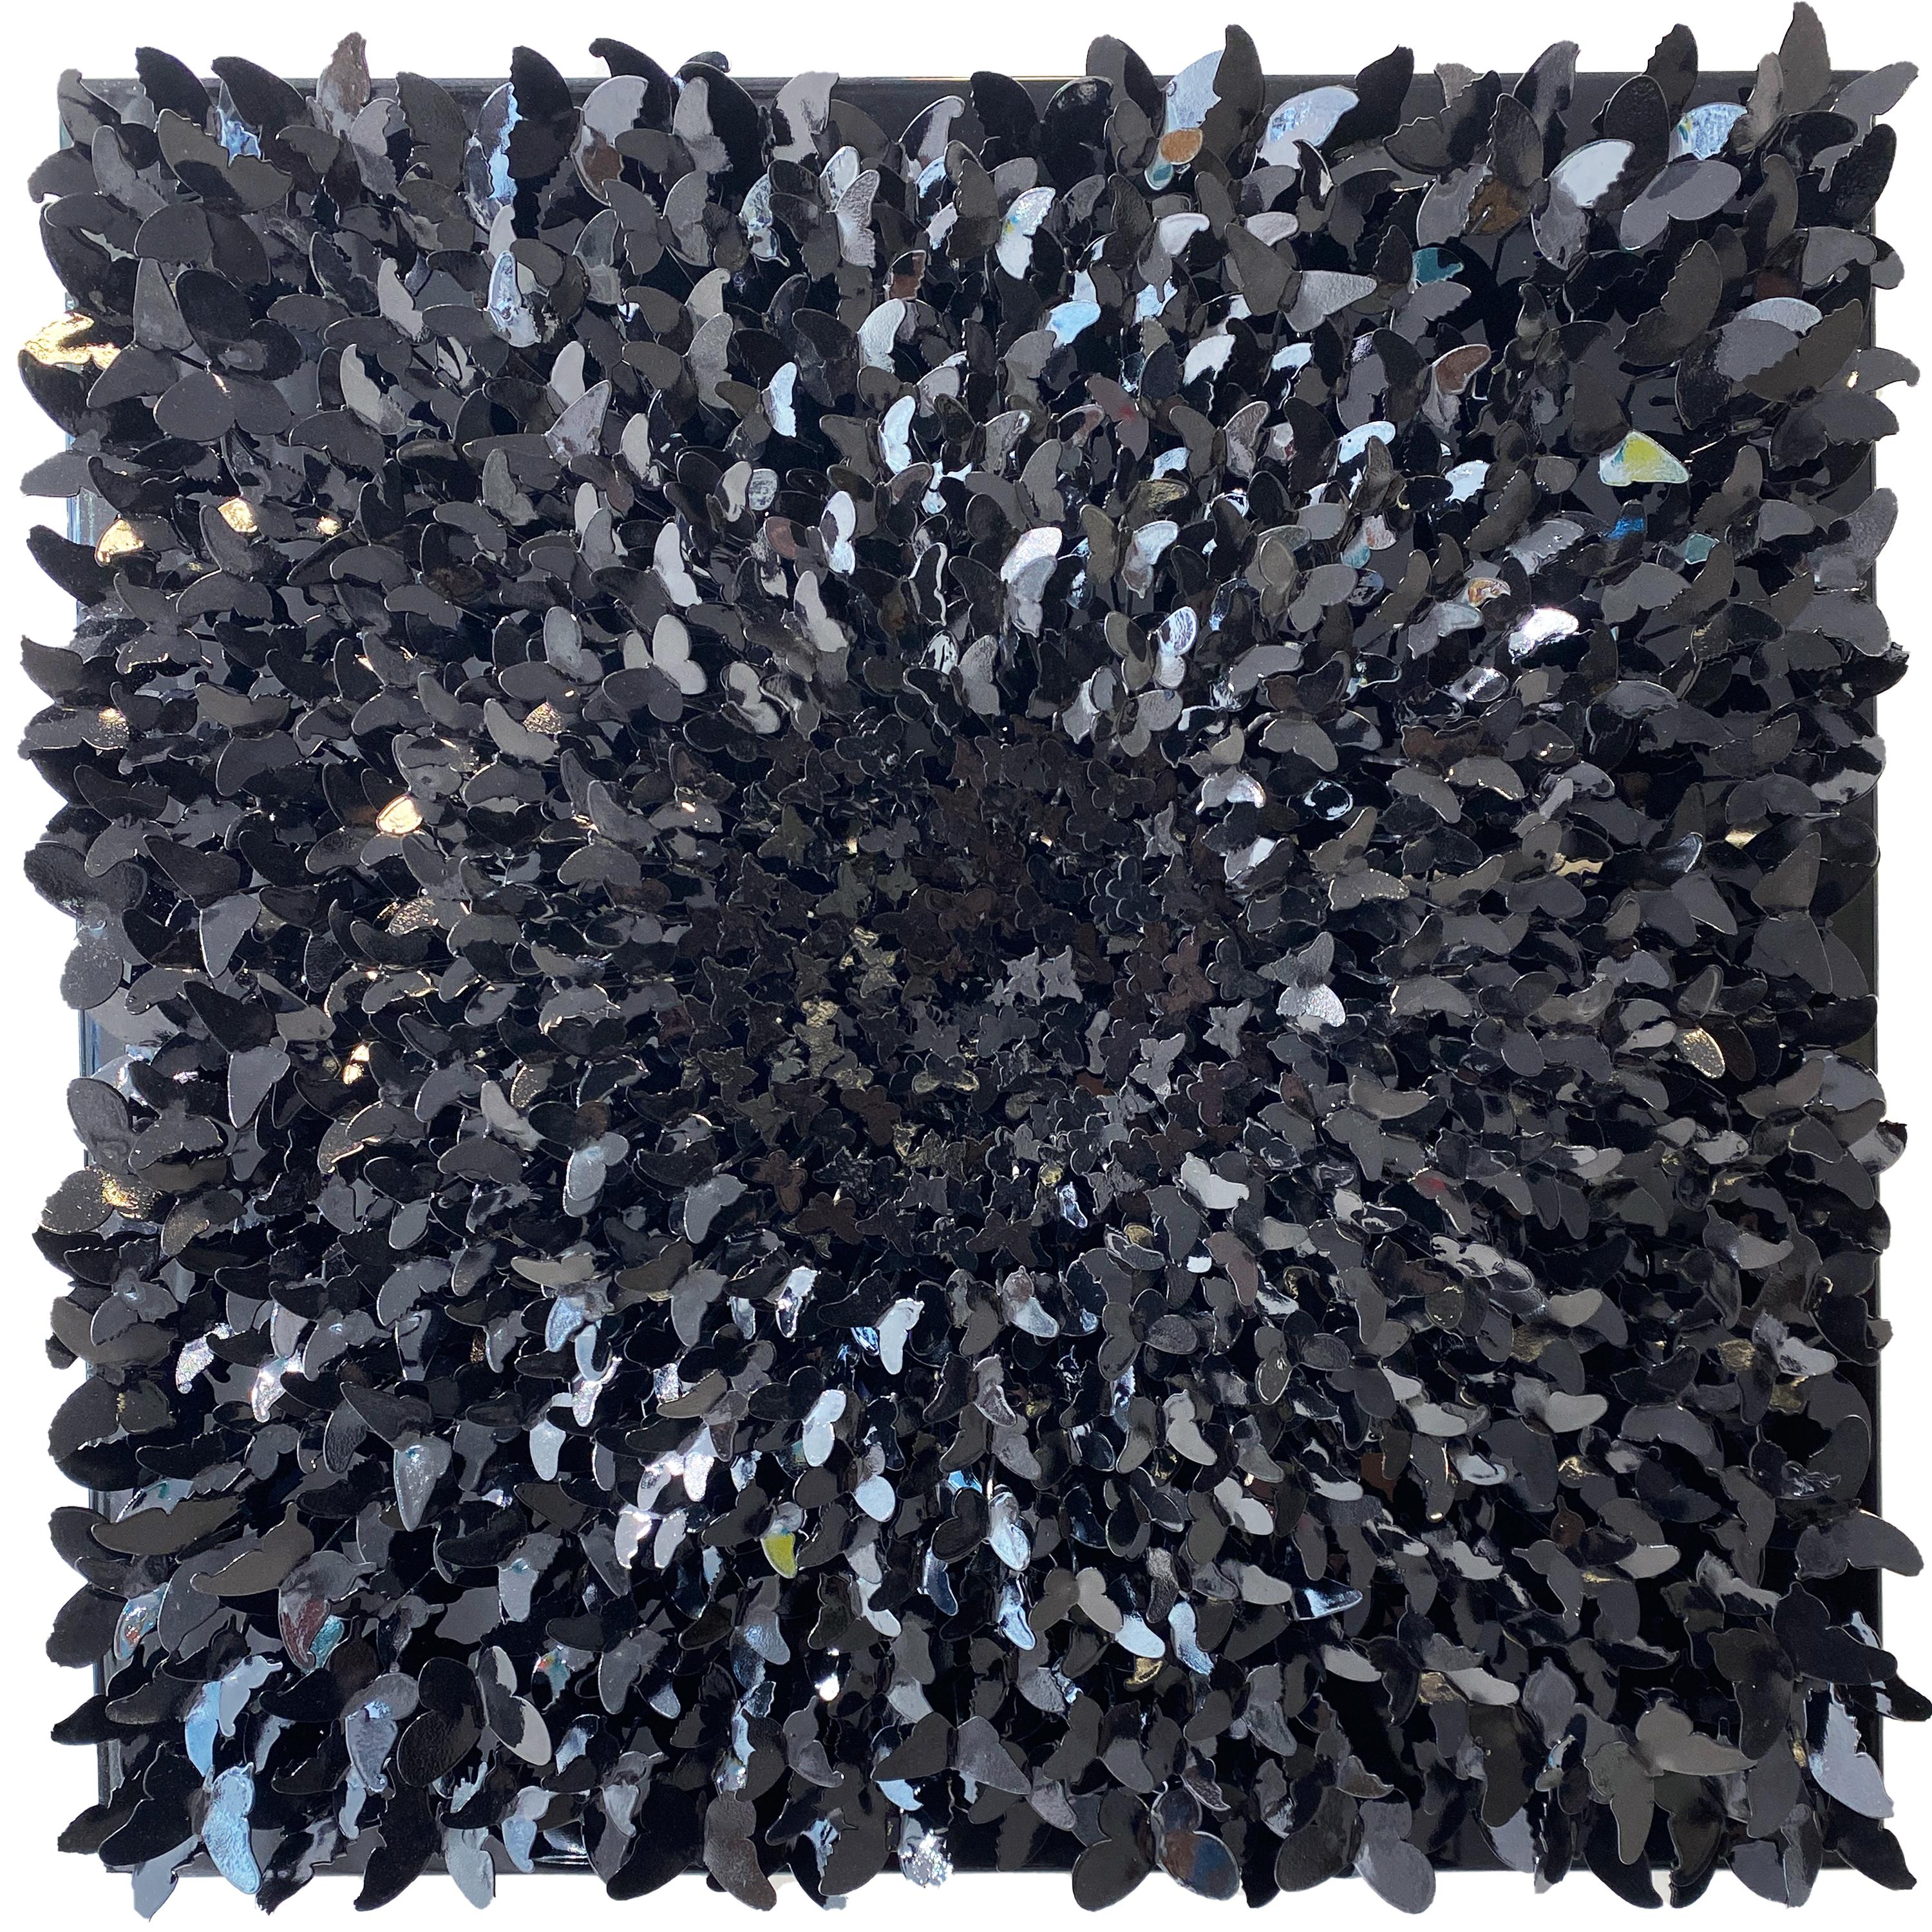 Full Sun (black), Mixed Media Metal Wall Sculpture